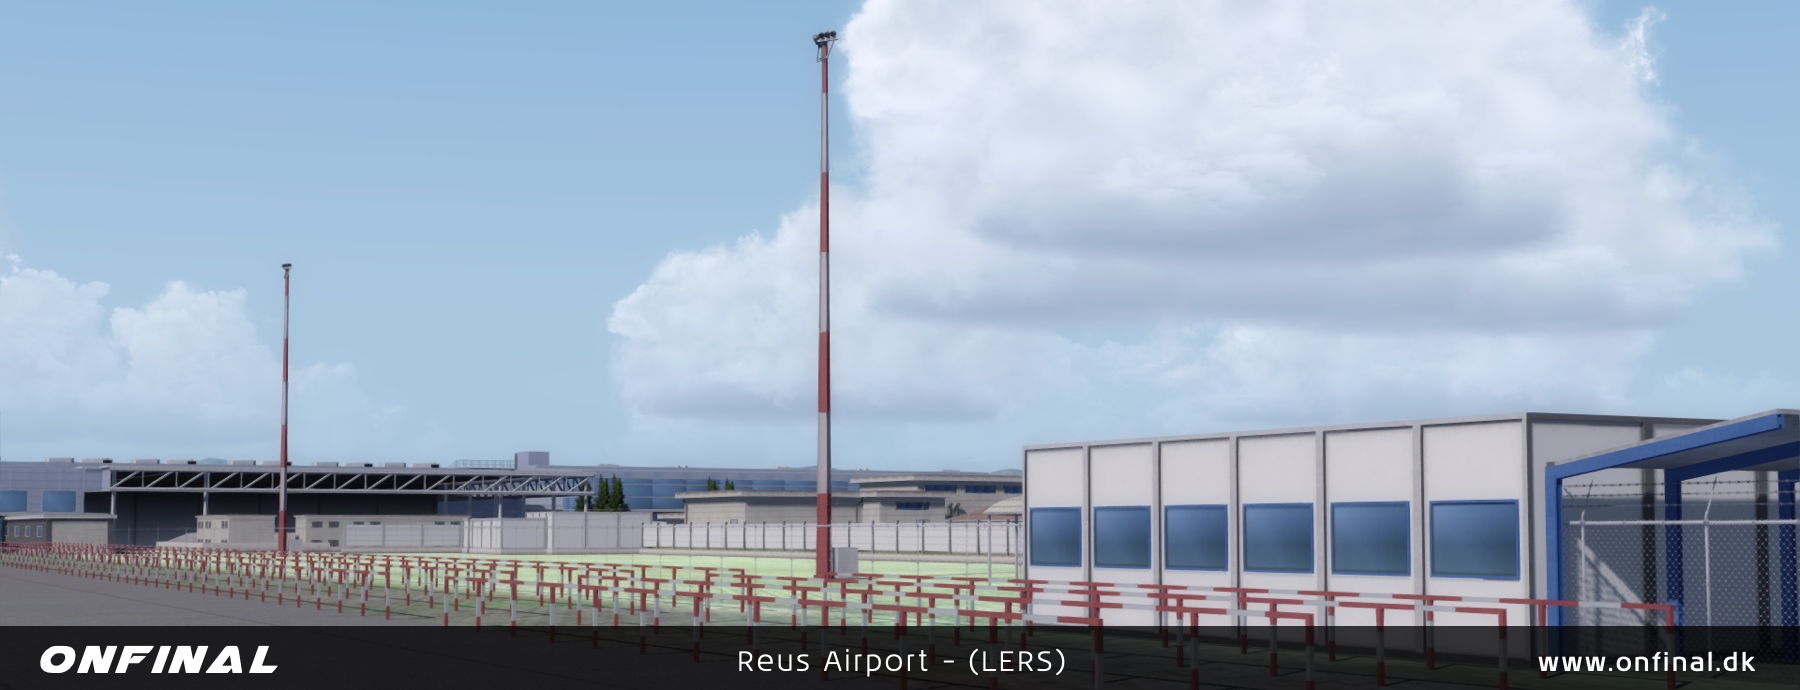 Reus Airport LERS Overview Night P3D Scenery